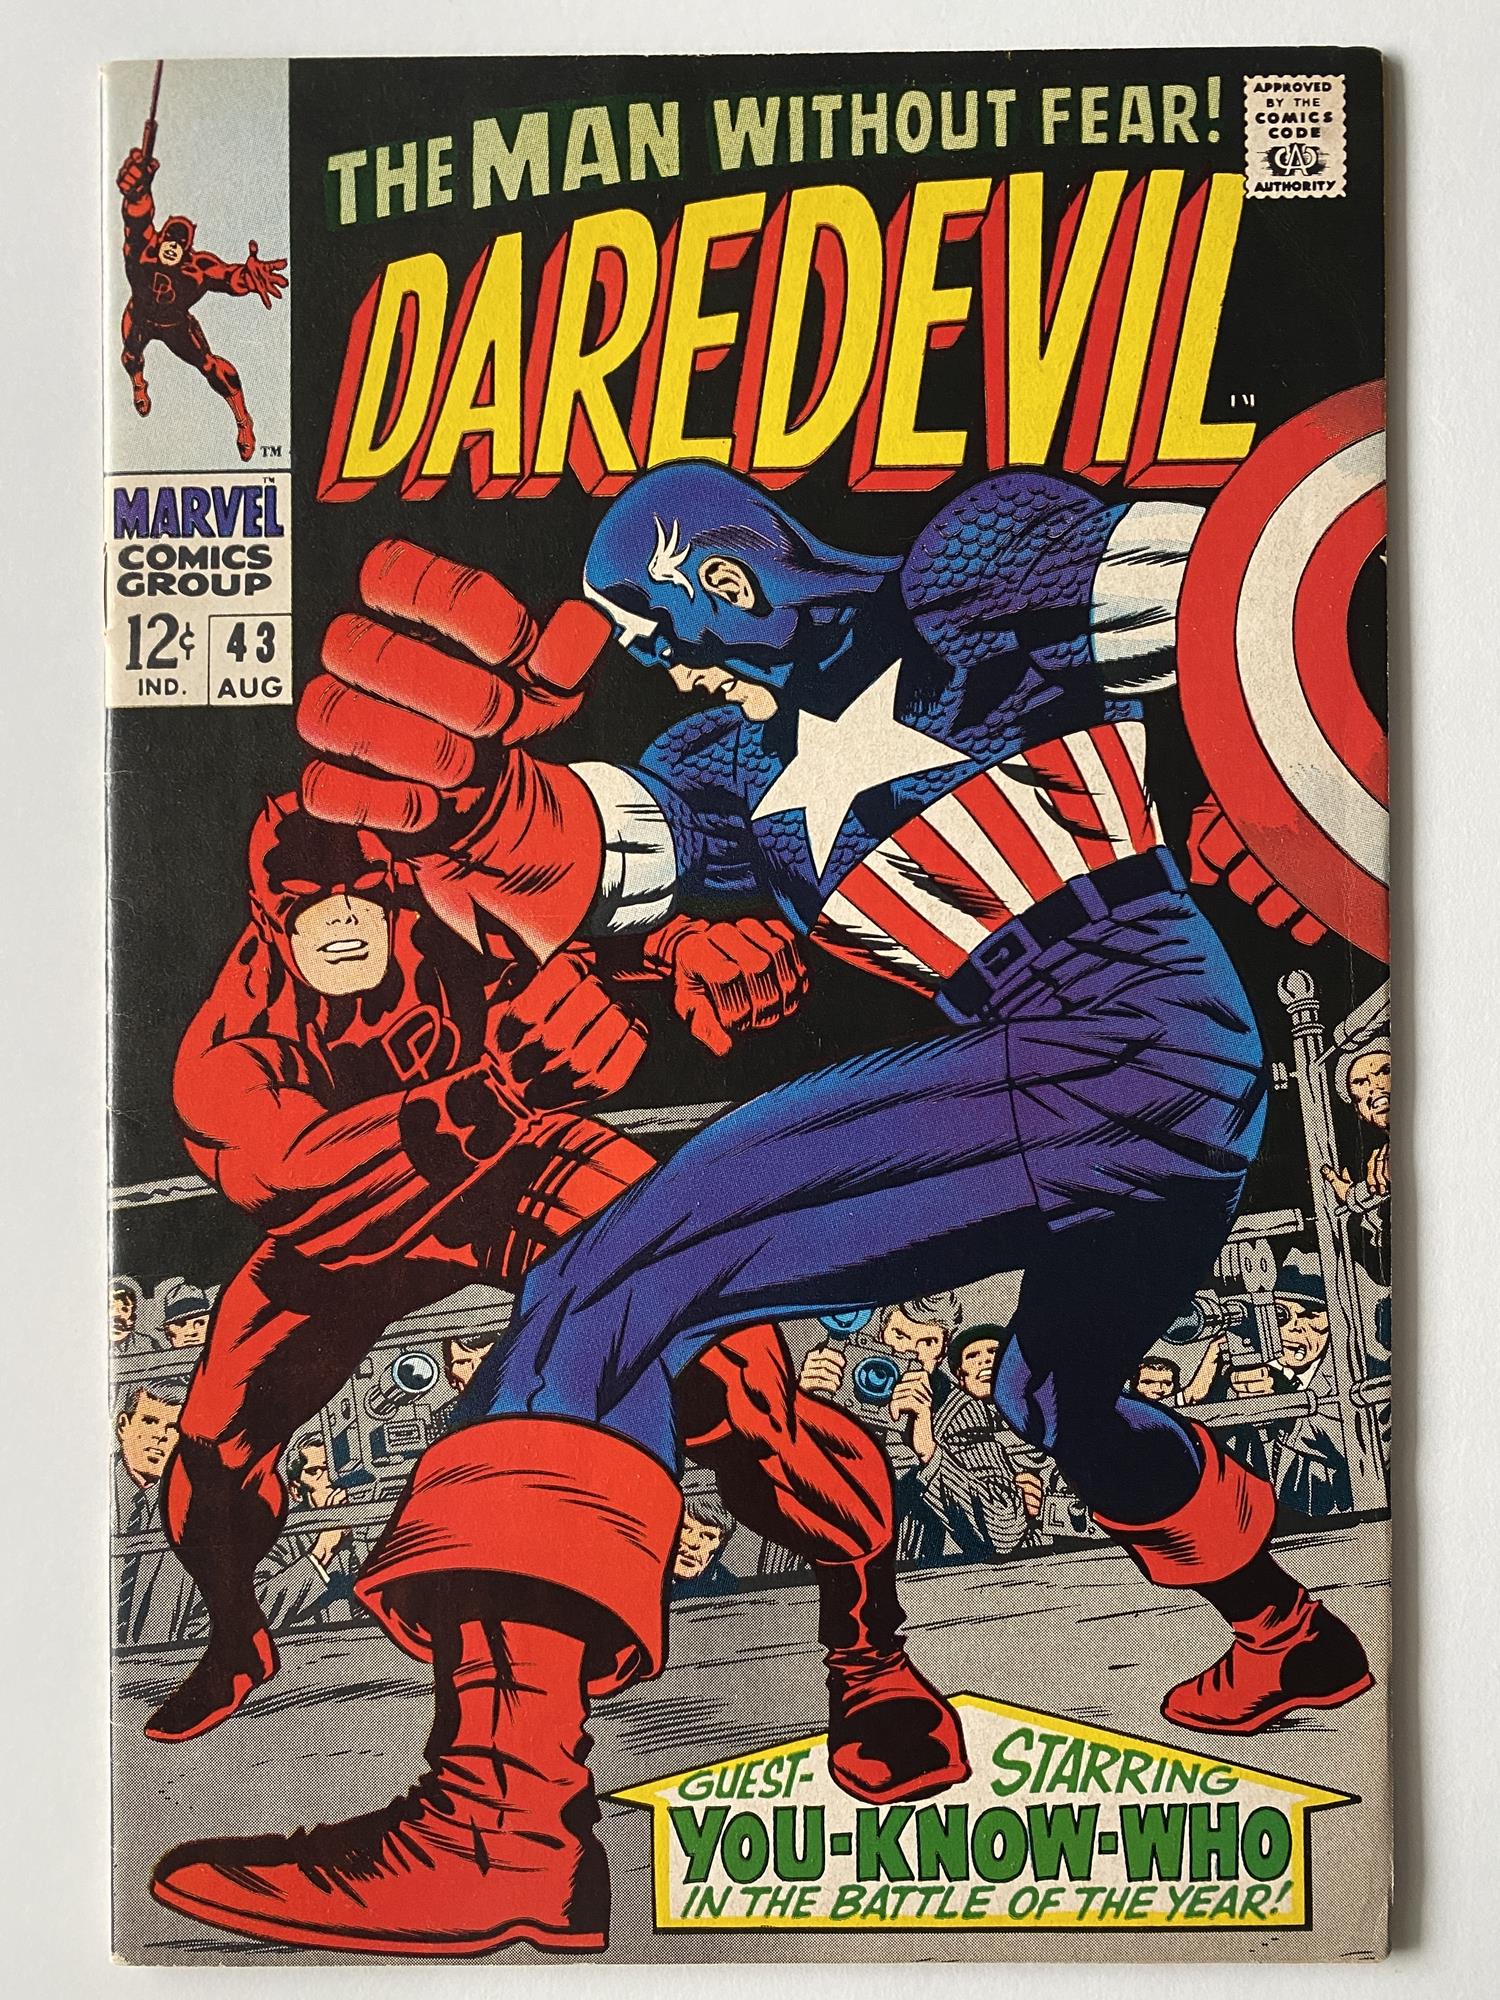 DAREDEVIL # 43 (1968 - MARVEL - Cents Copy) - Classic Jack Kirby cover as Daredevil battles